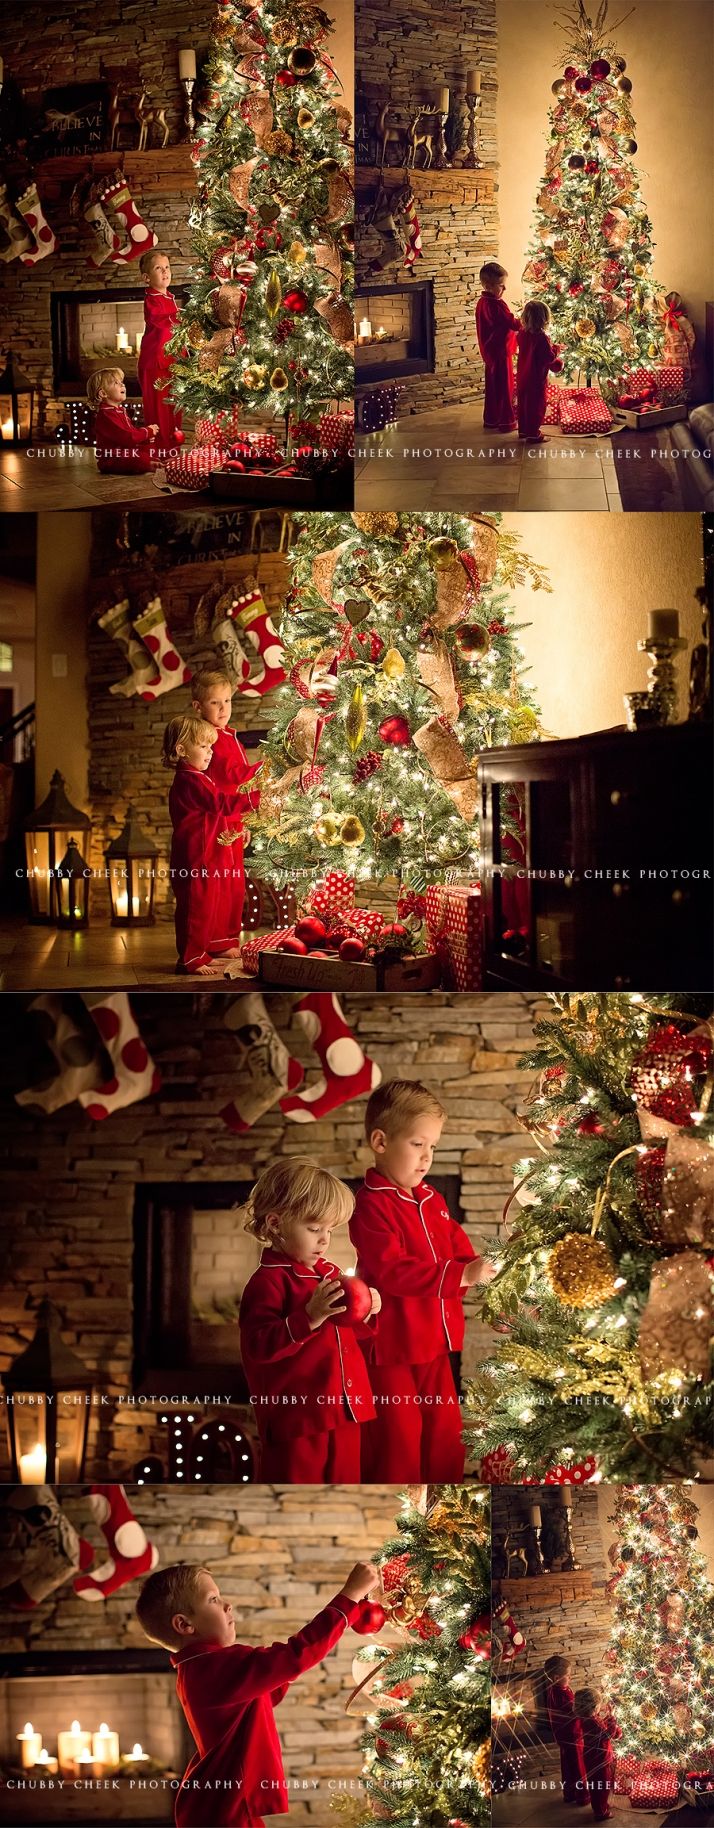 Christmas Fireplaces Decor 33 - Fireplace Mantel Décor Styles For The Christmas Season